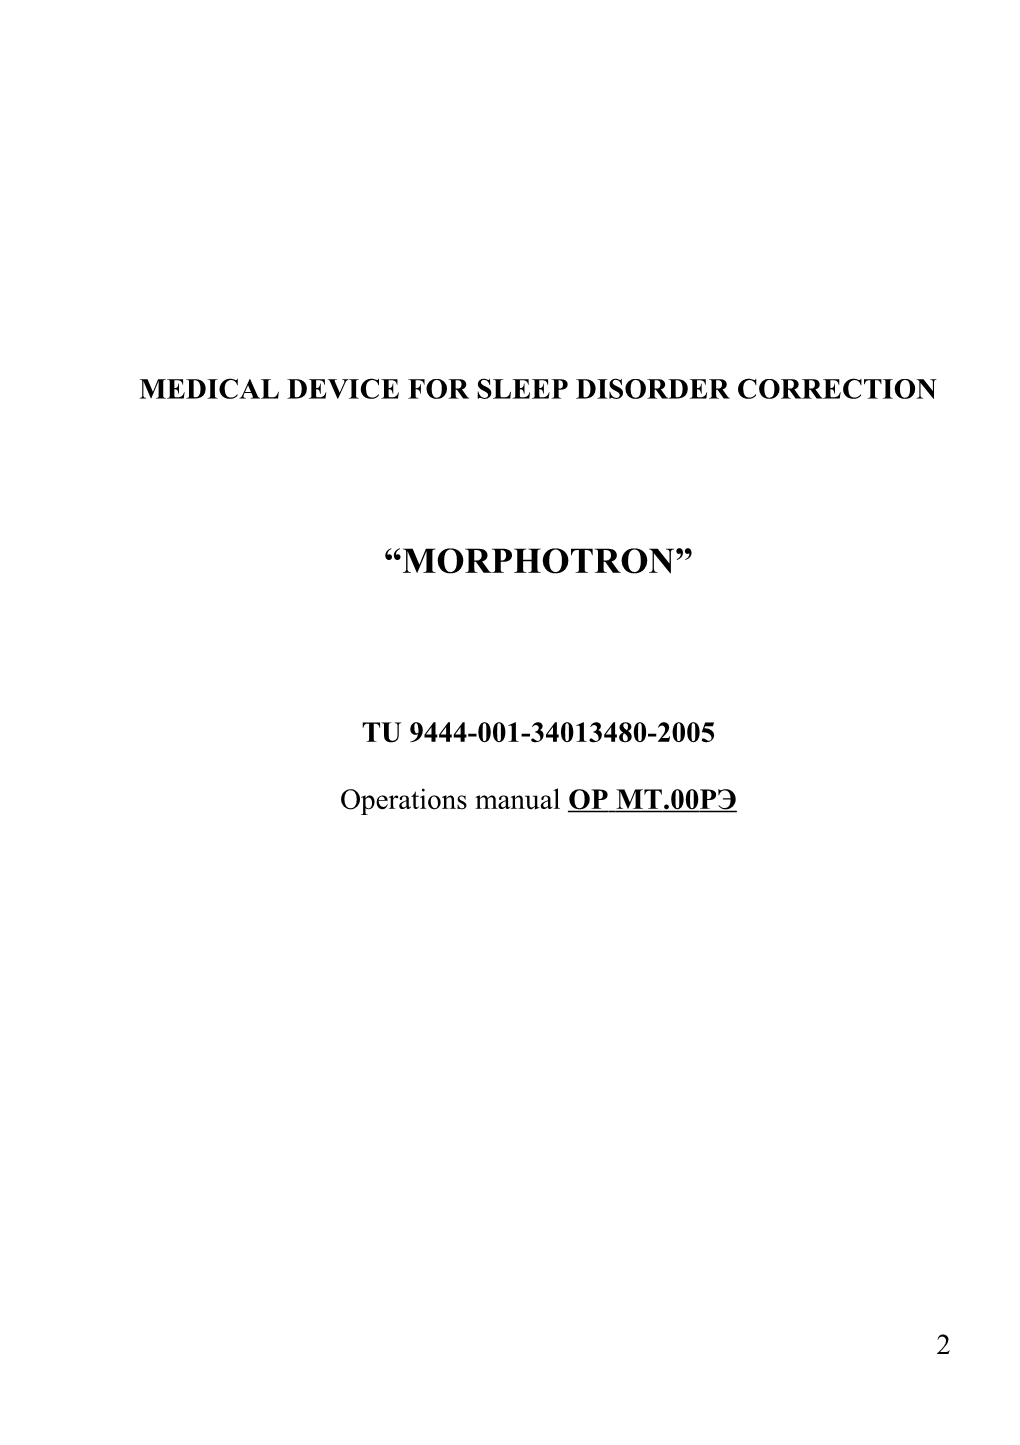 Medical Device for Sleep Disorder Correction